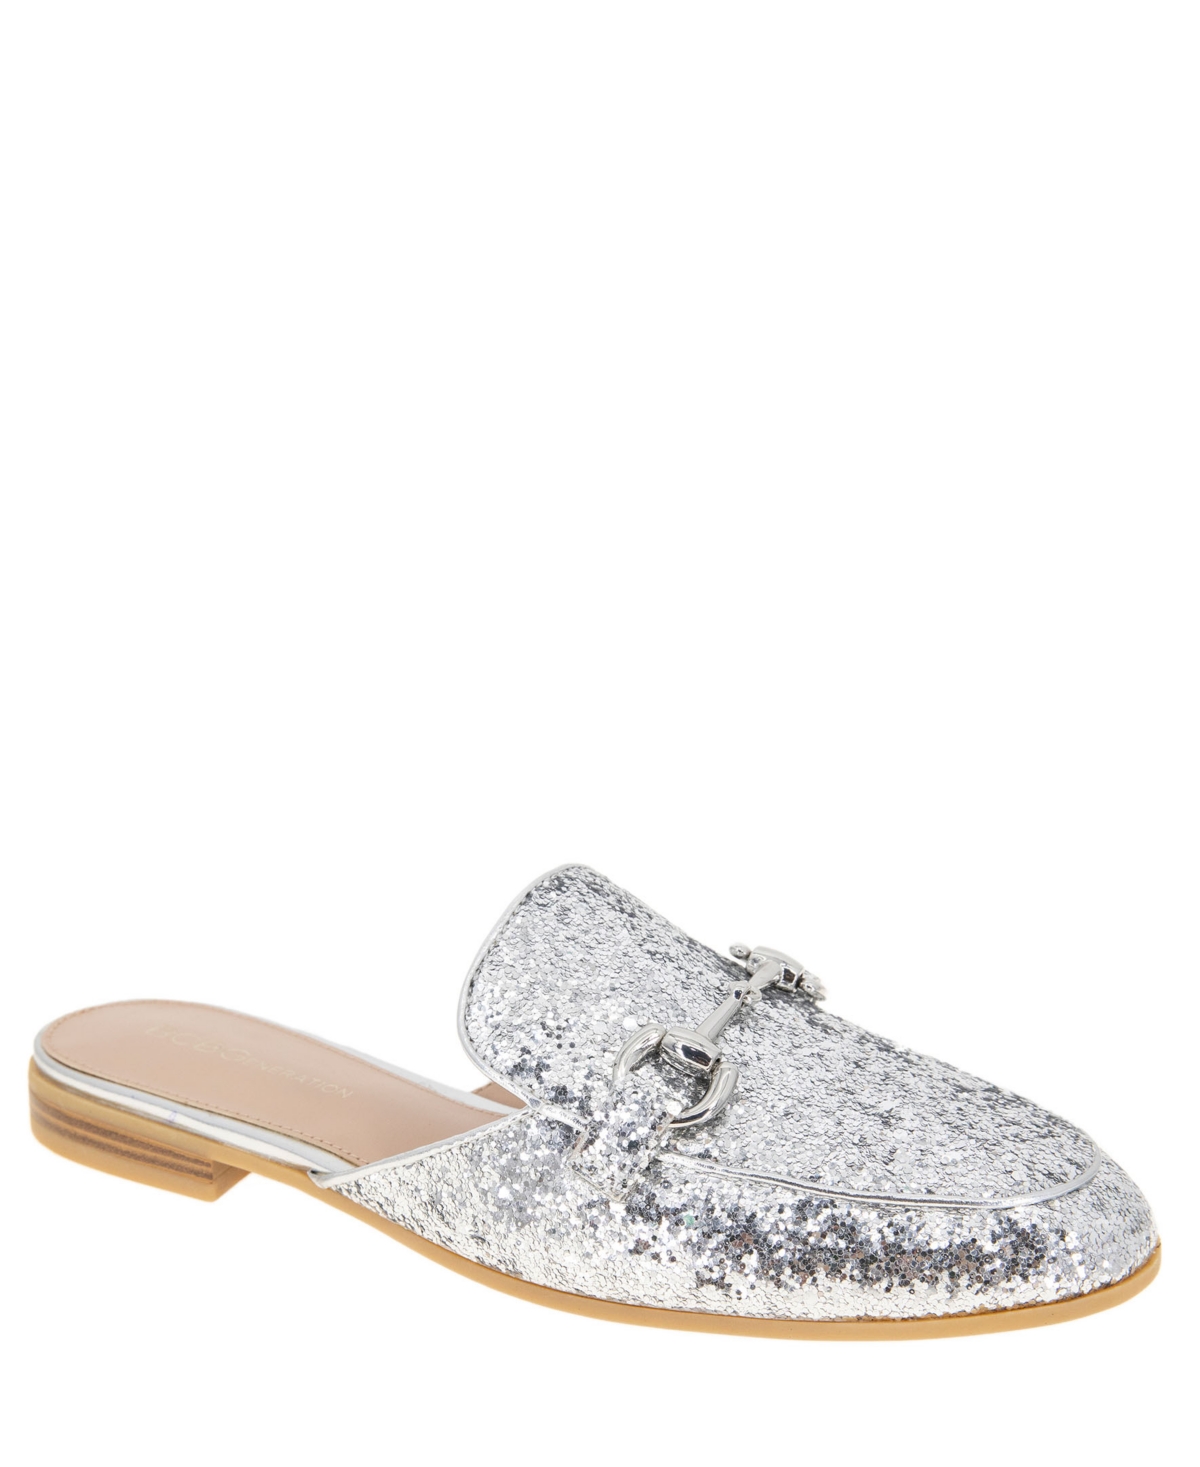 Women's Zorie Tailored Slip-On Loafer Mules - Silver Glitter